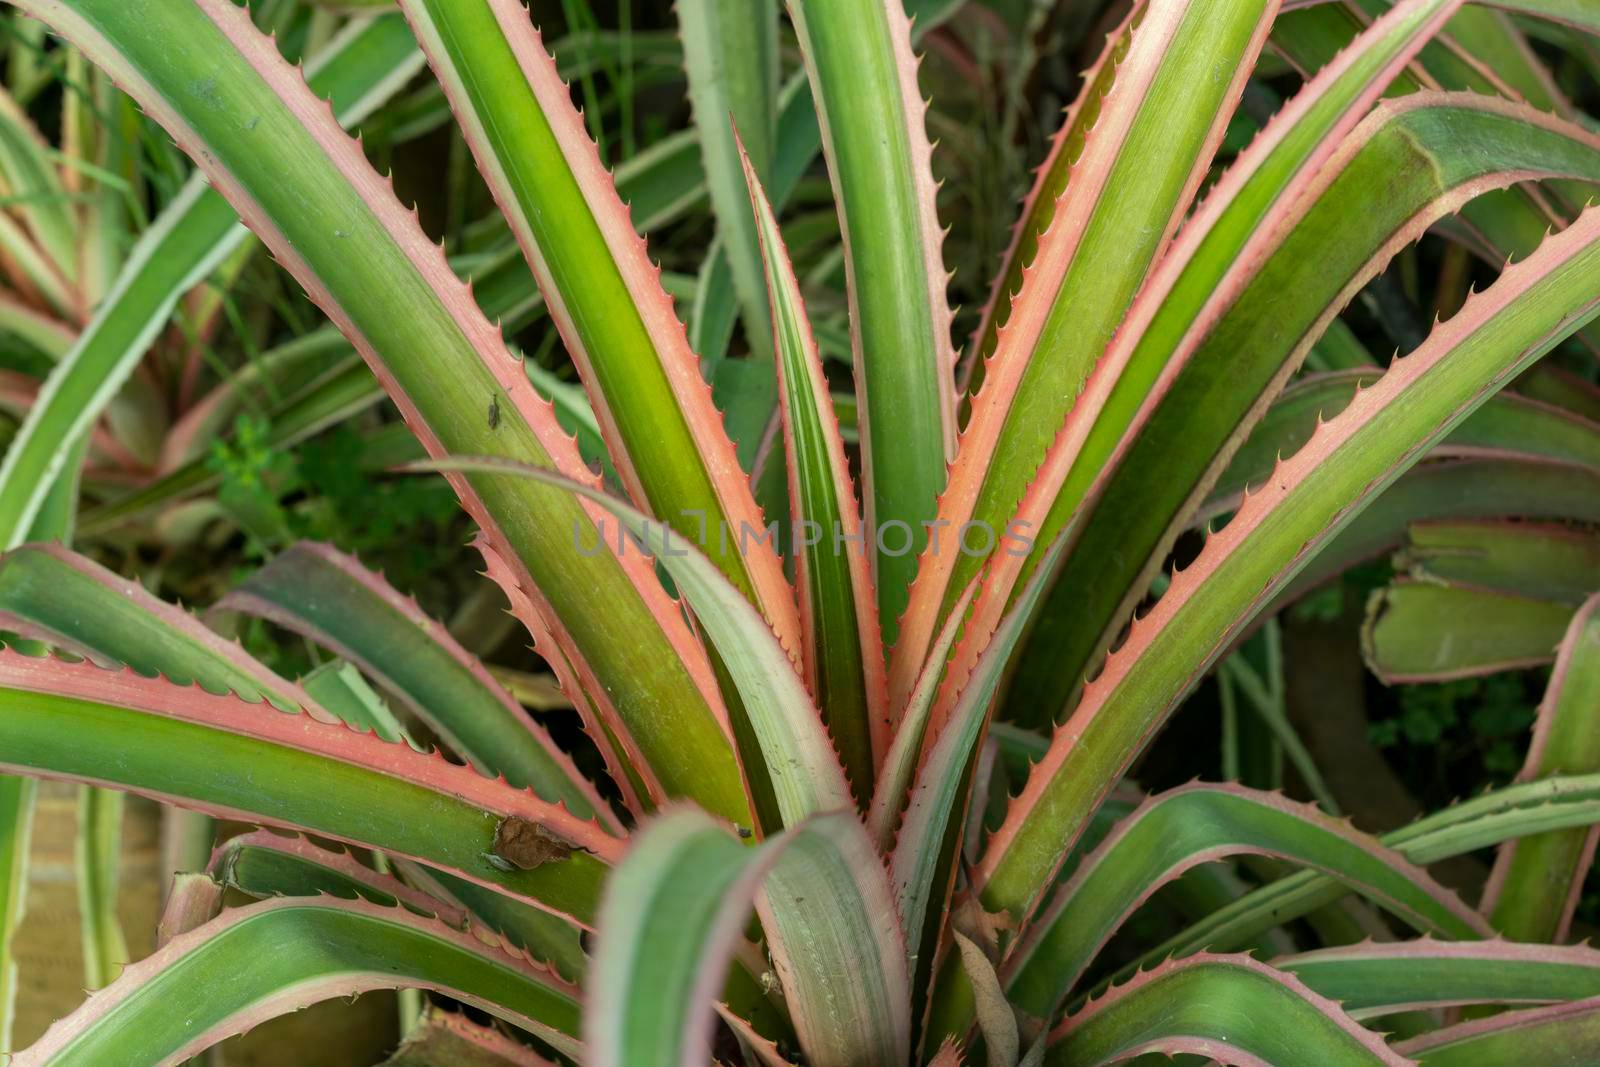 Closeup of an ornamental pineapple plant